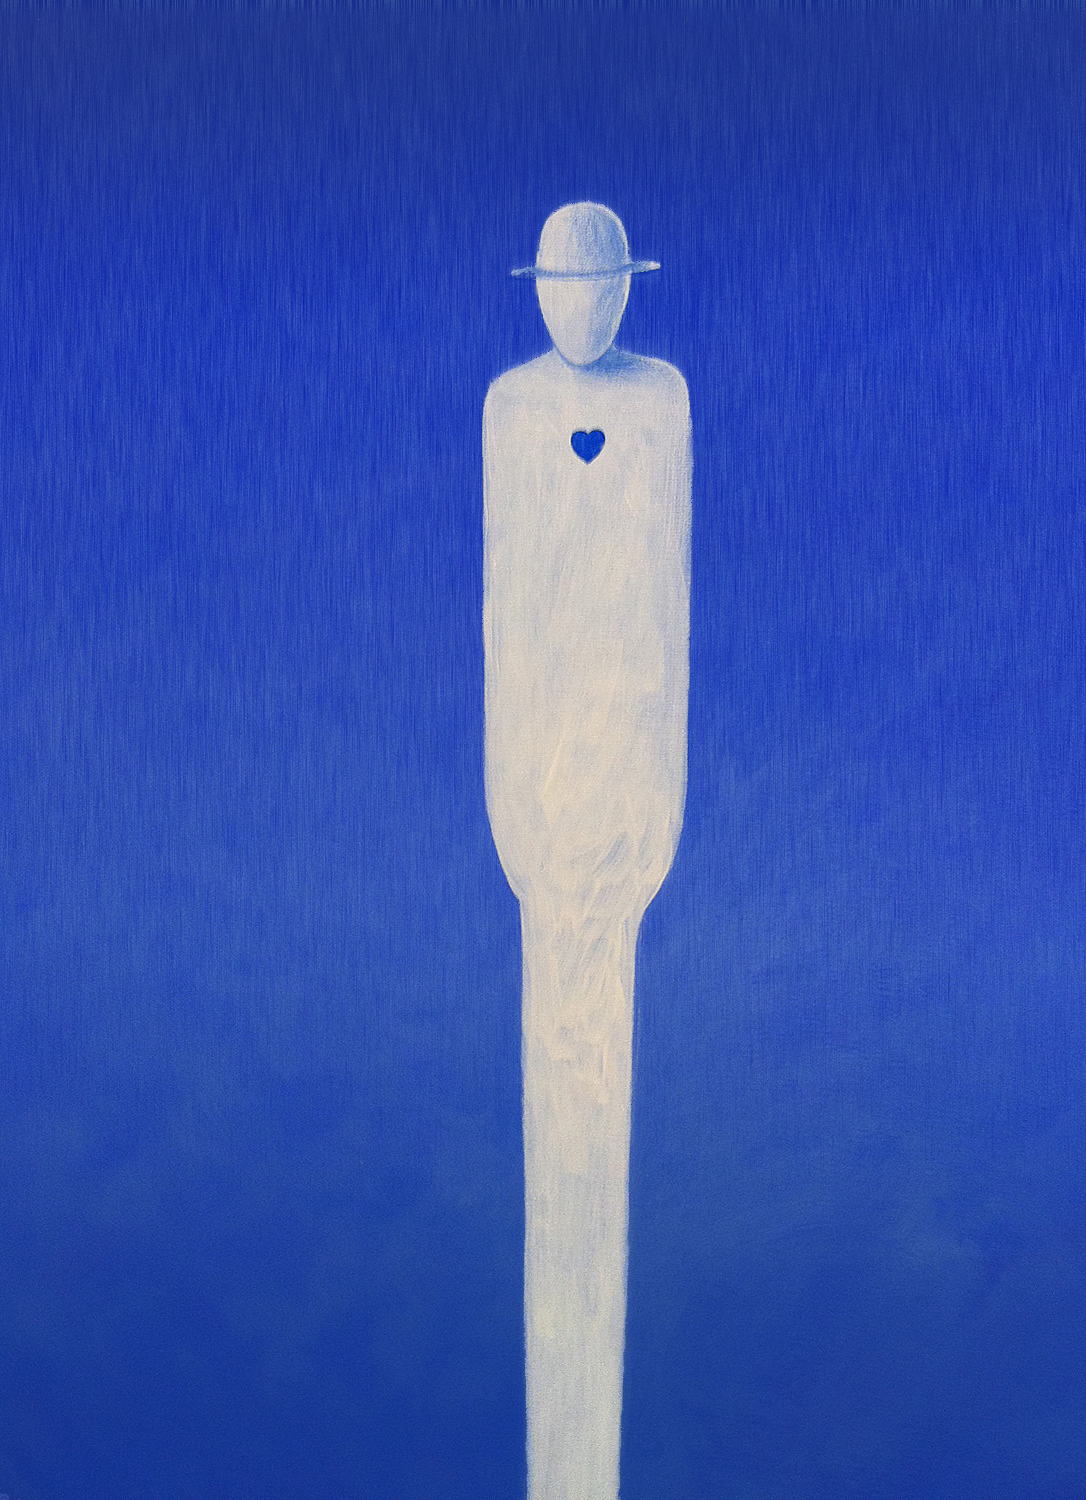 Steven Lavaggi's Blue Hearted Man